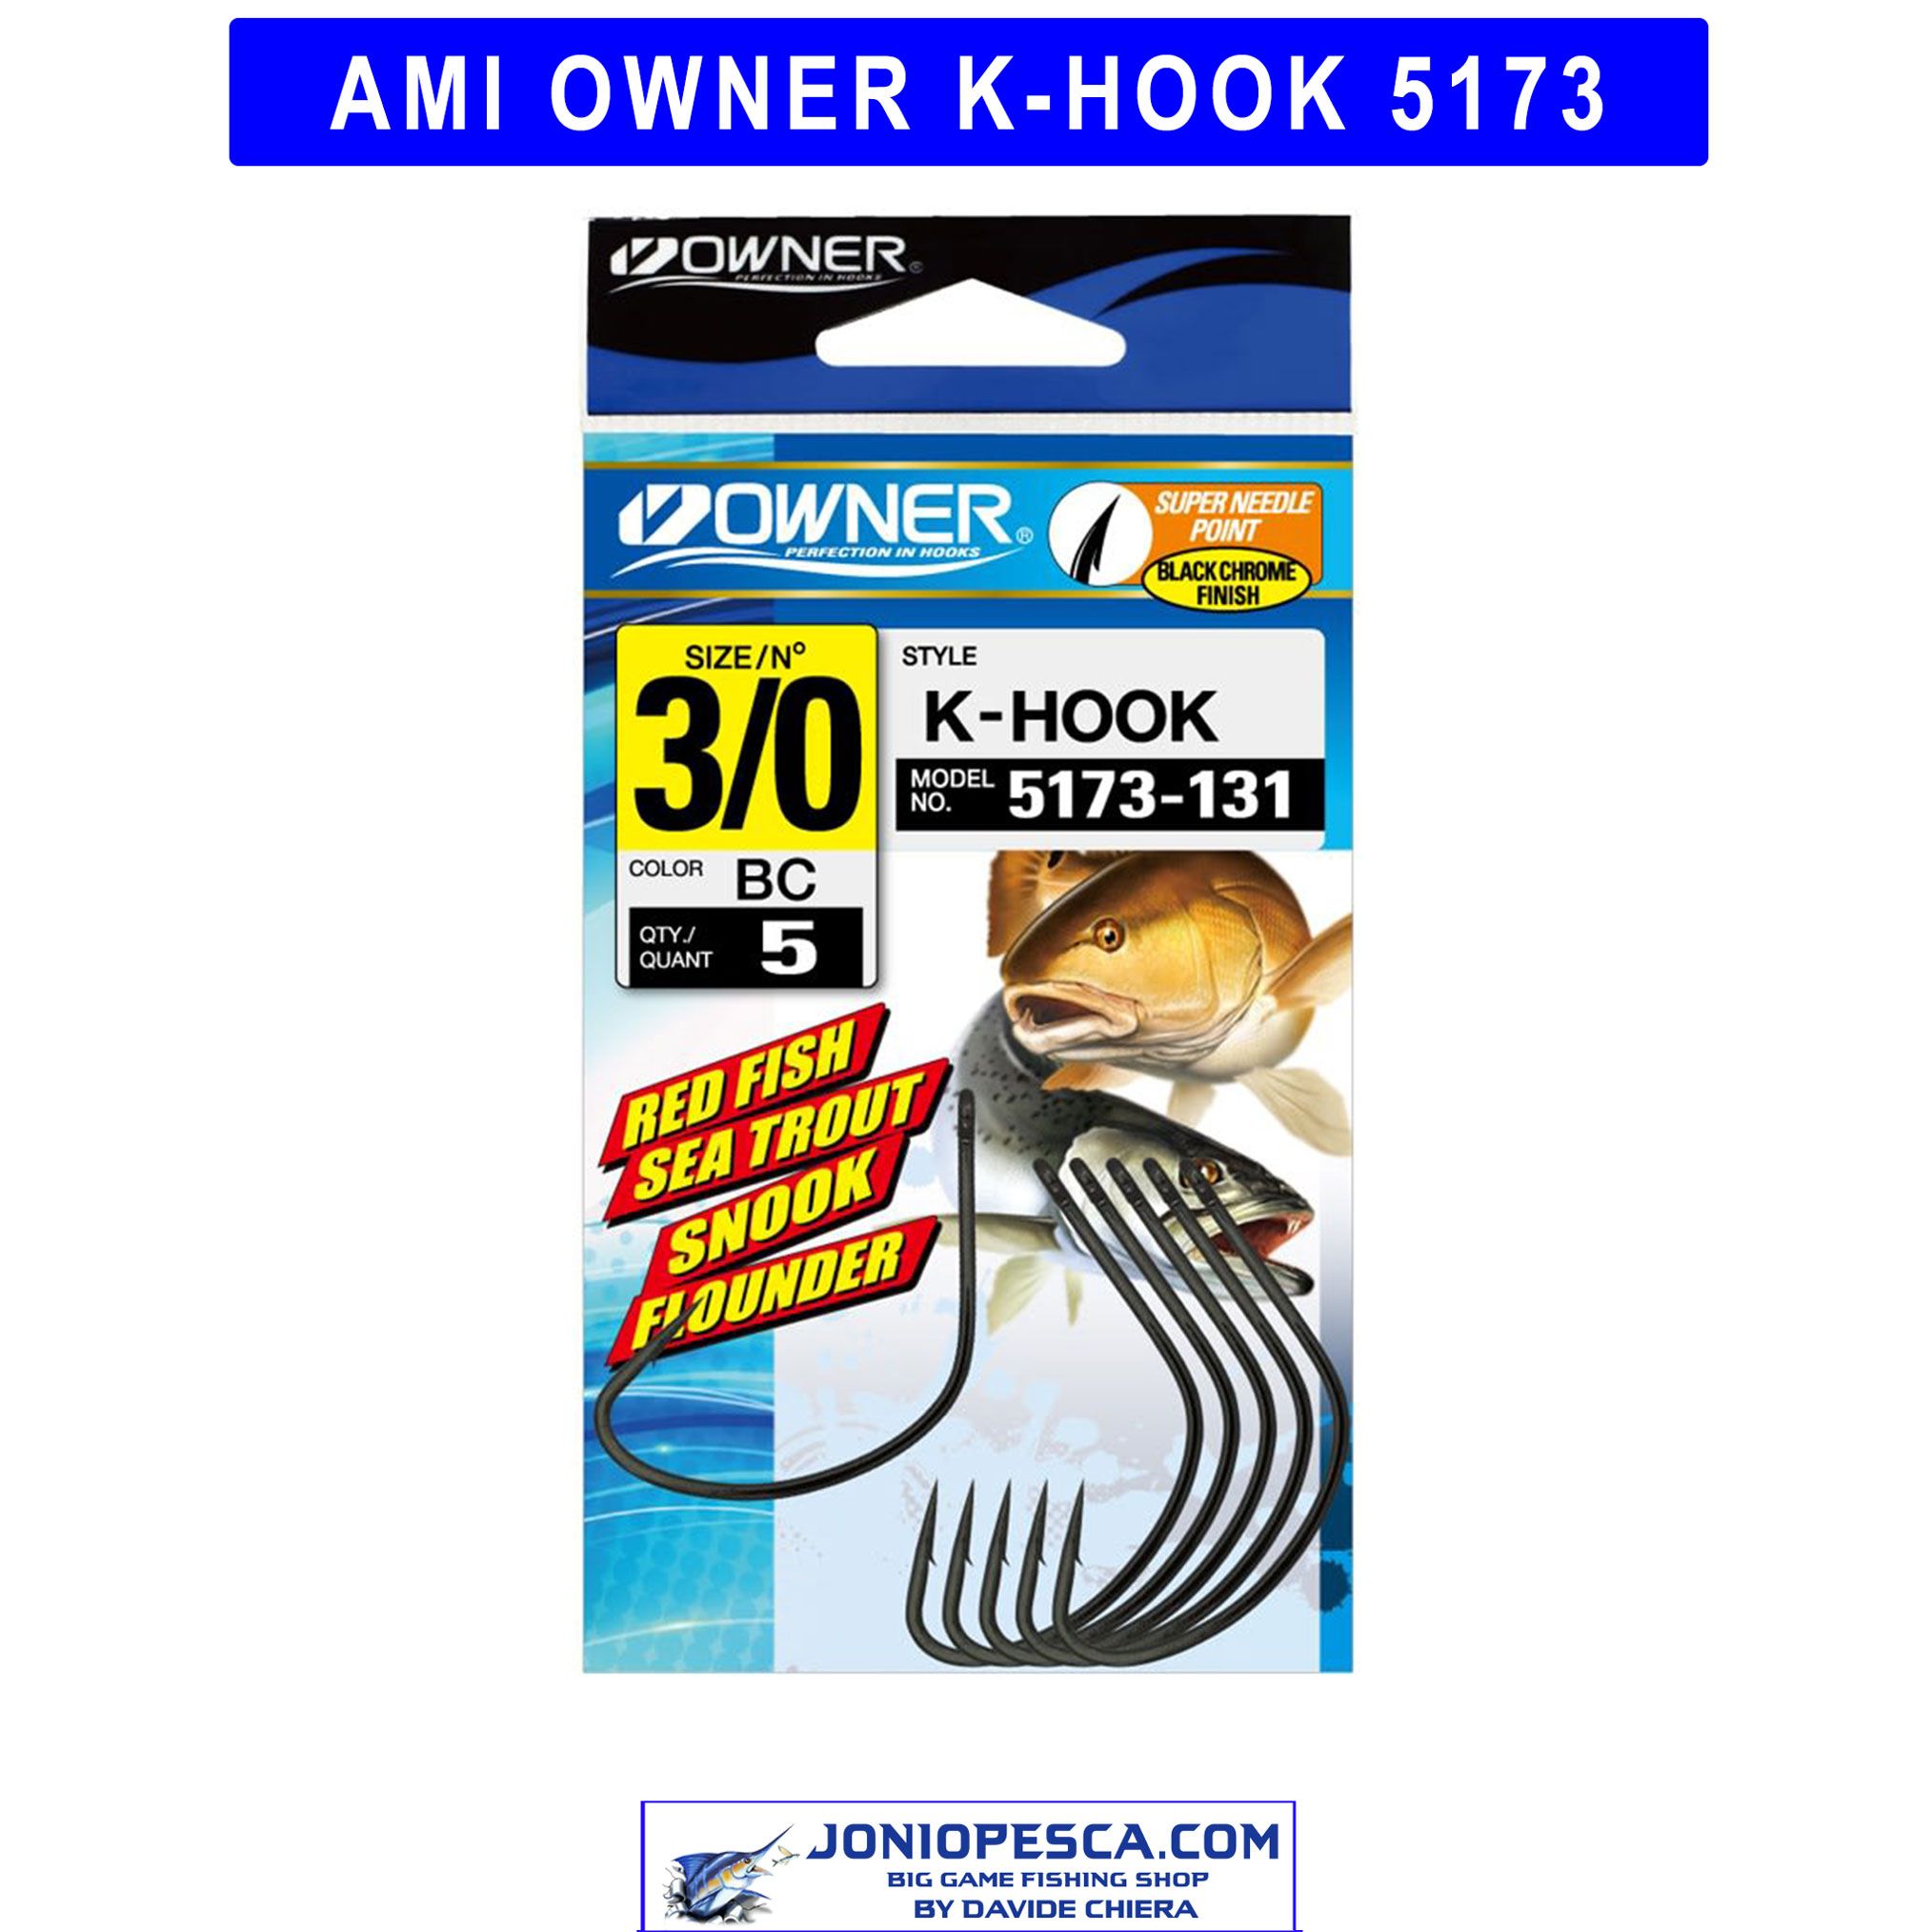 ami-owner-k-hook-5173